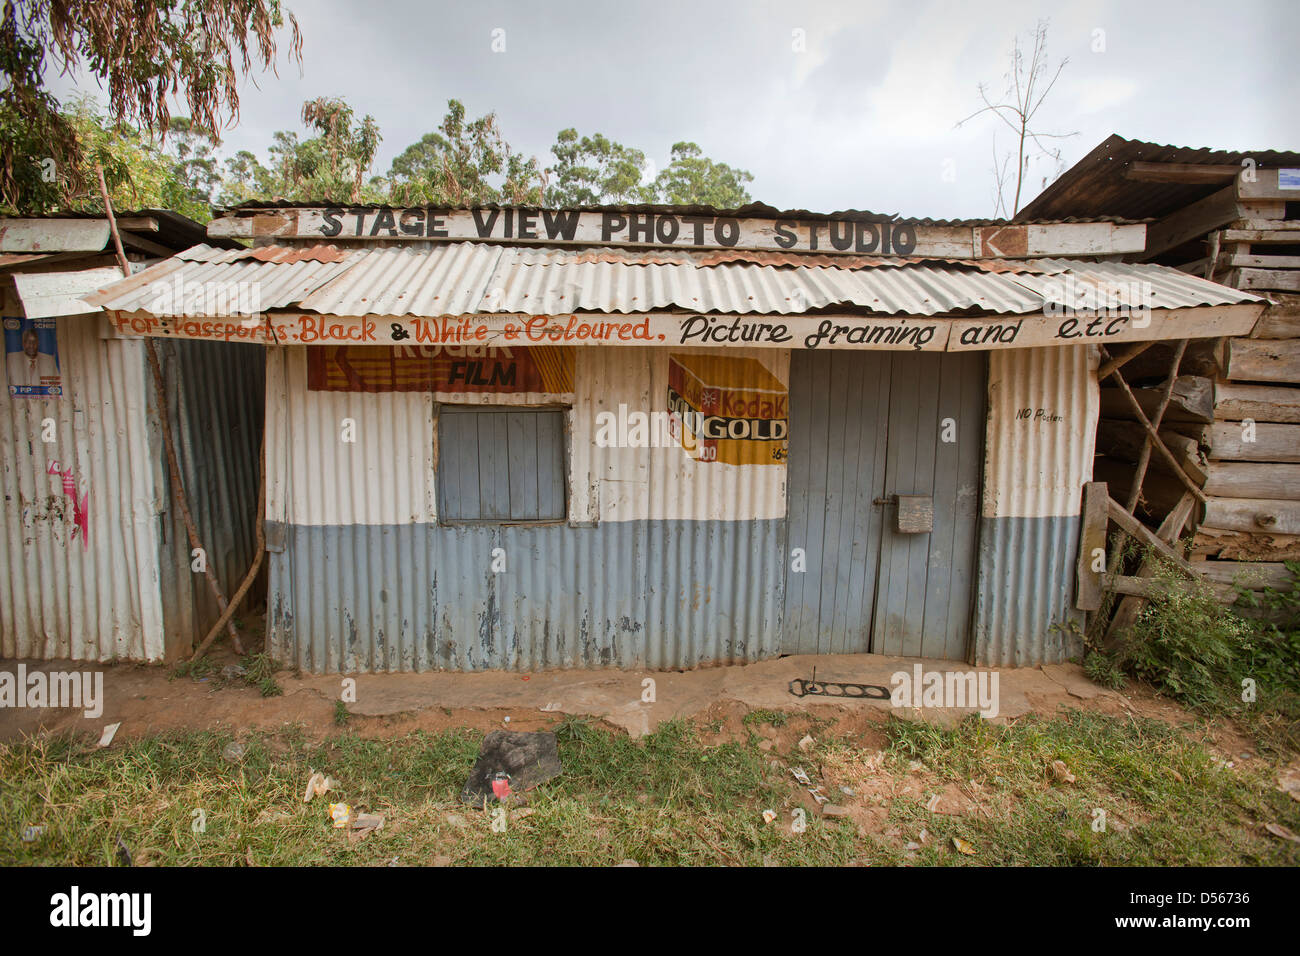 Il 'Stage Visualizza foto Studio' Photo Kiosk, provincia di Yala, Kenya. Foto Stock